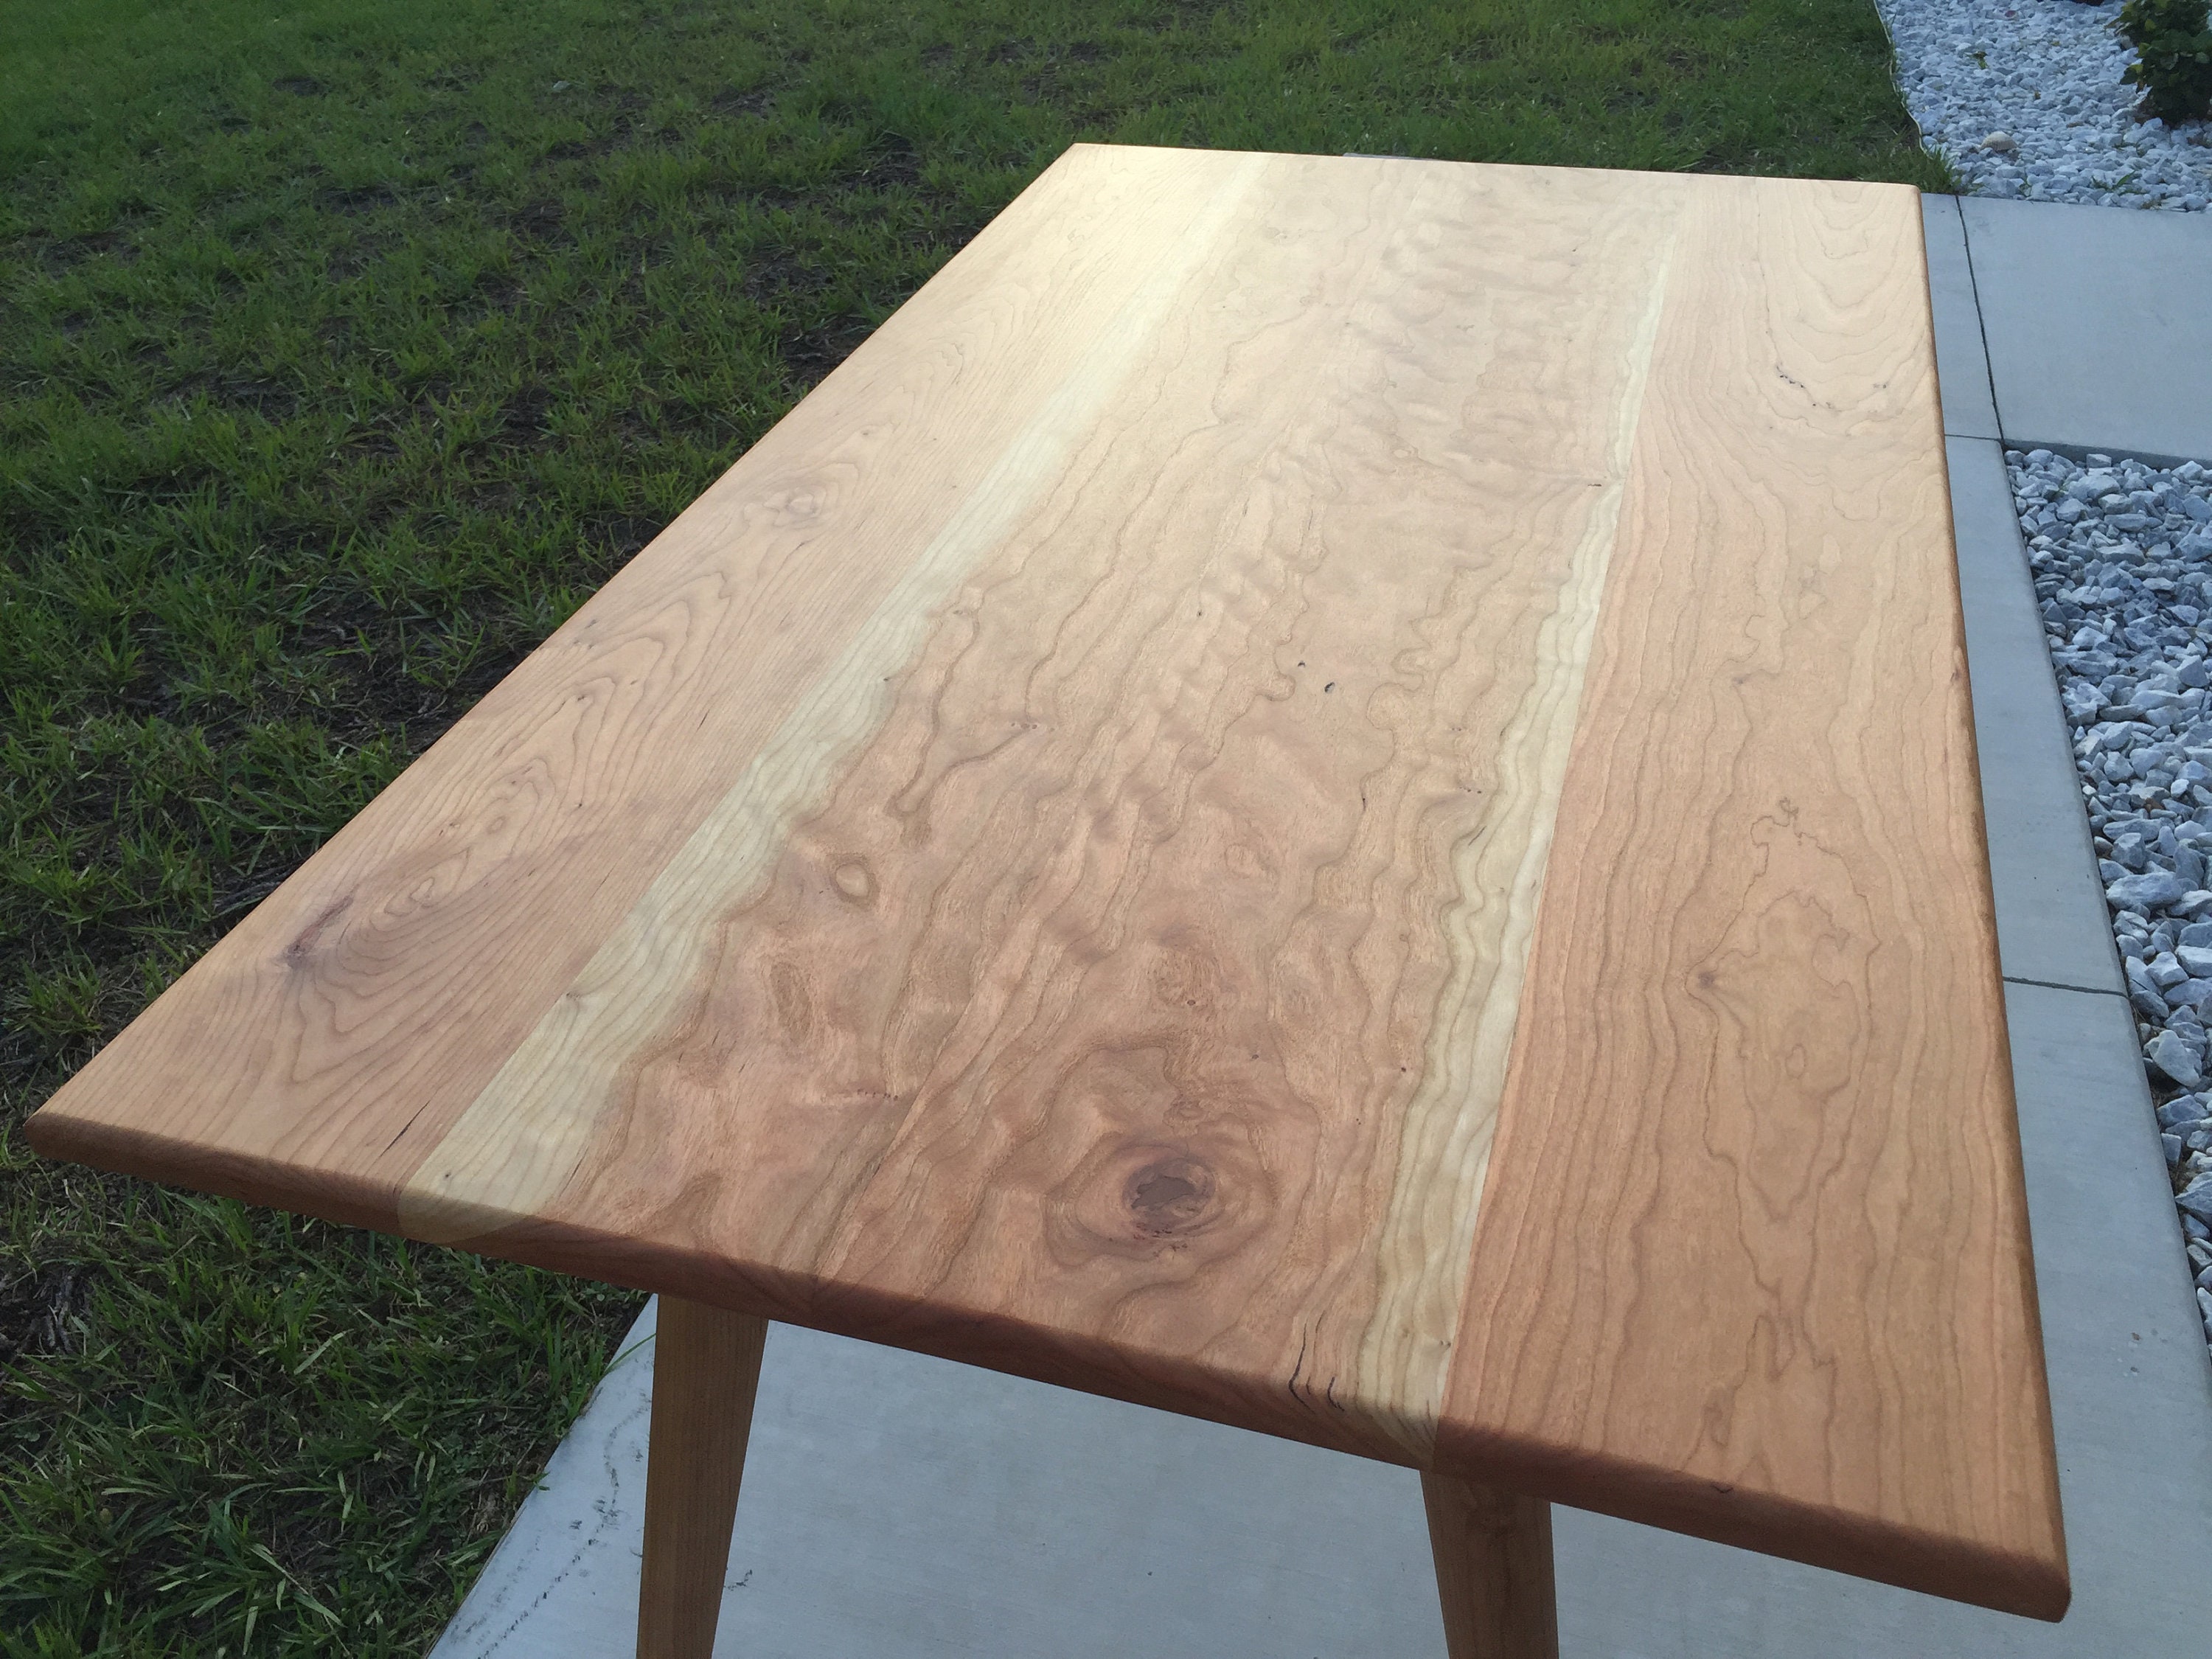 Cherry Table Top, Wood Desk Top, Solid Wood Table Top, Custom